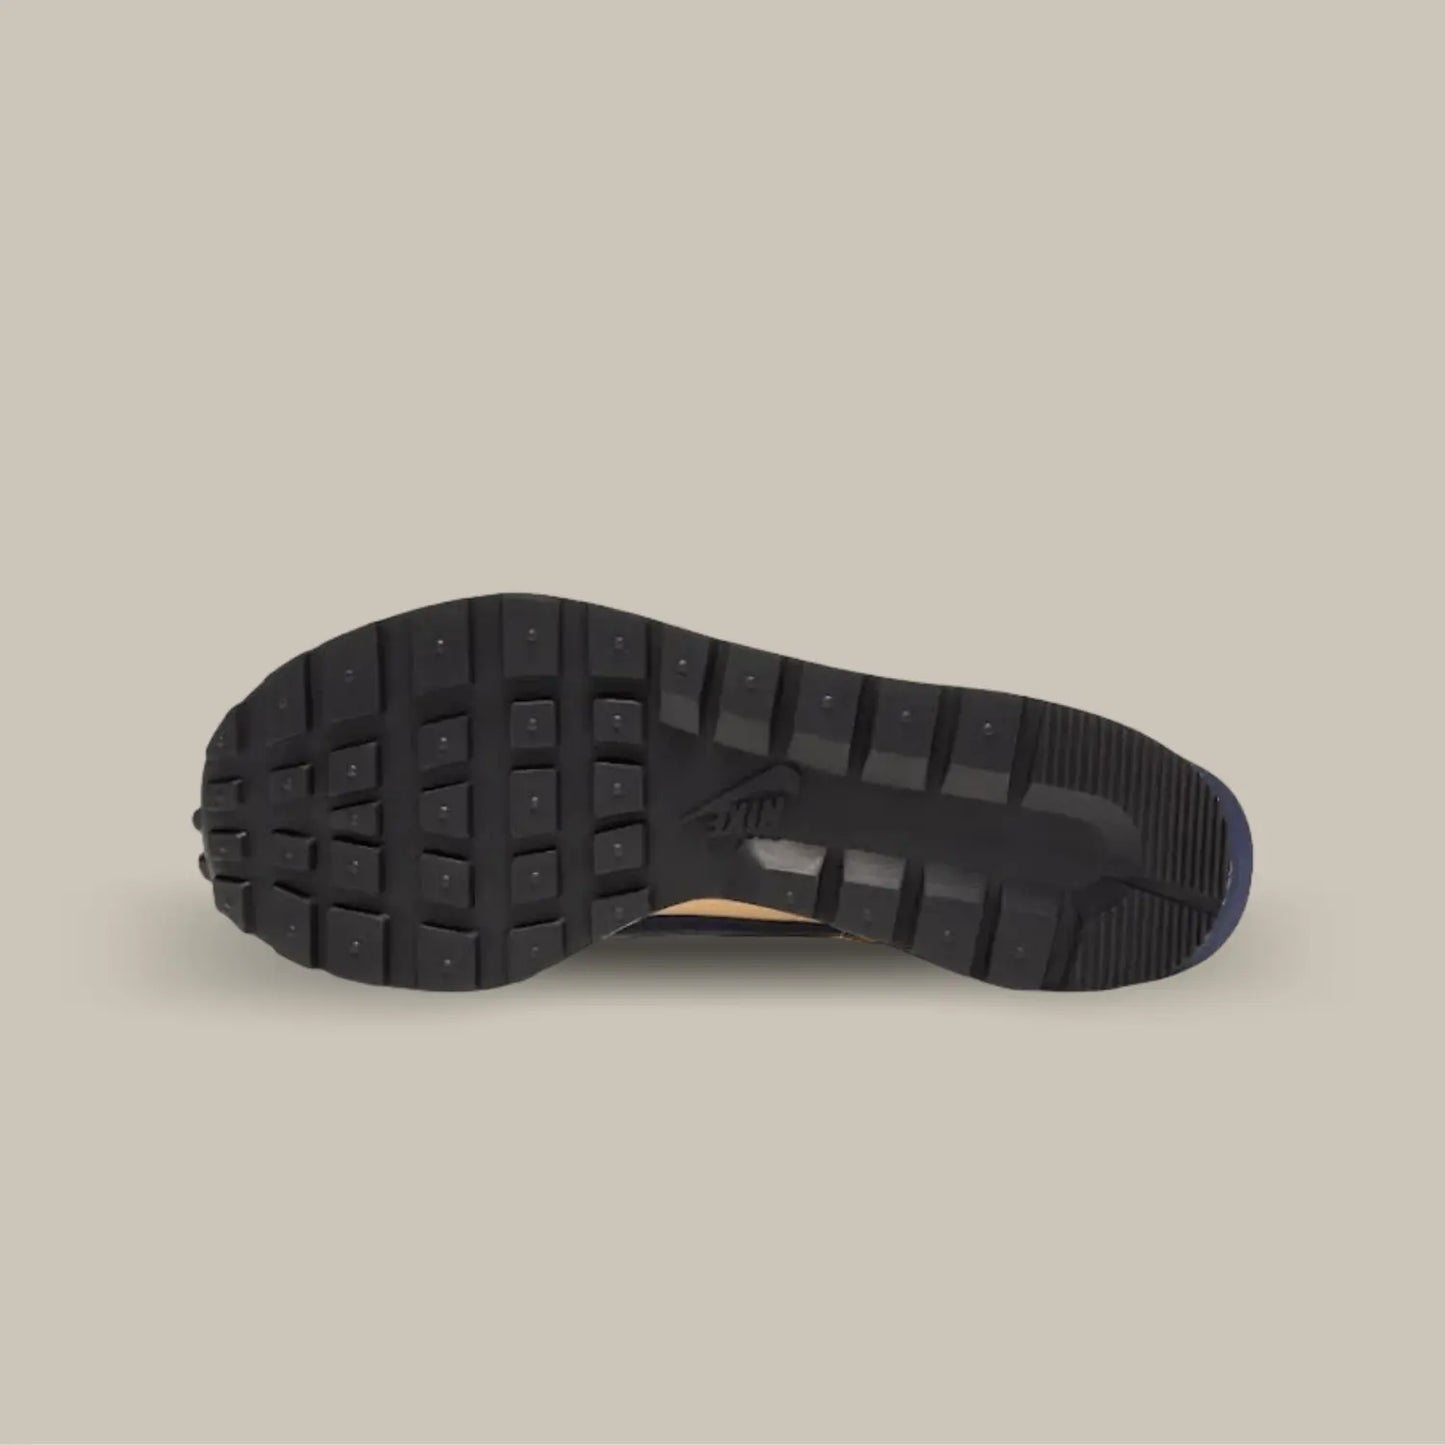 La semelle noir de la Nike Vaporwaffle Sacai Tan Navy